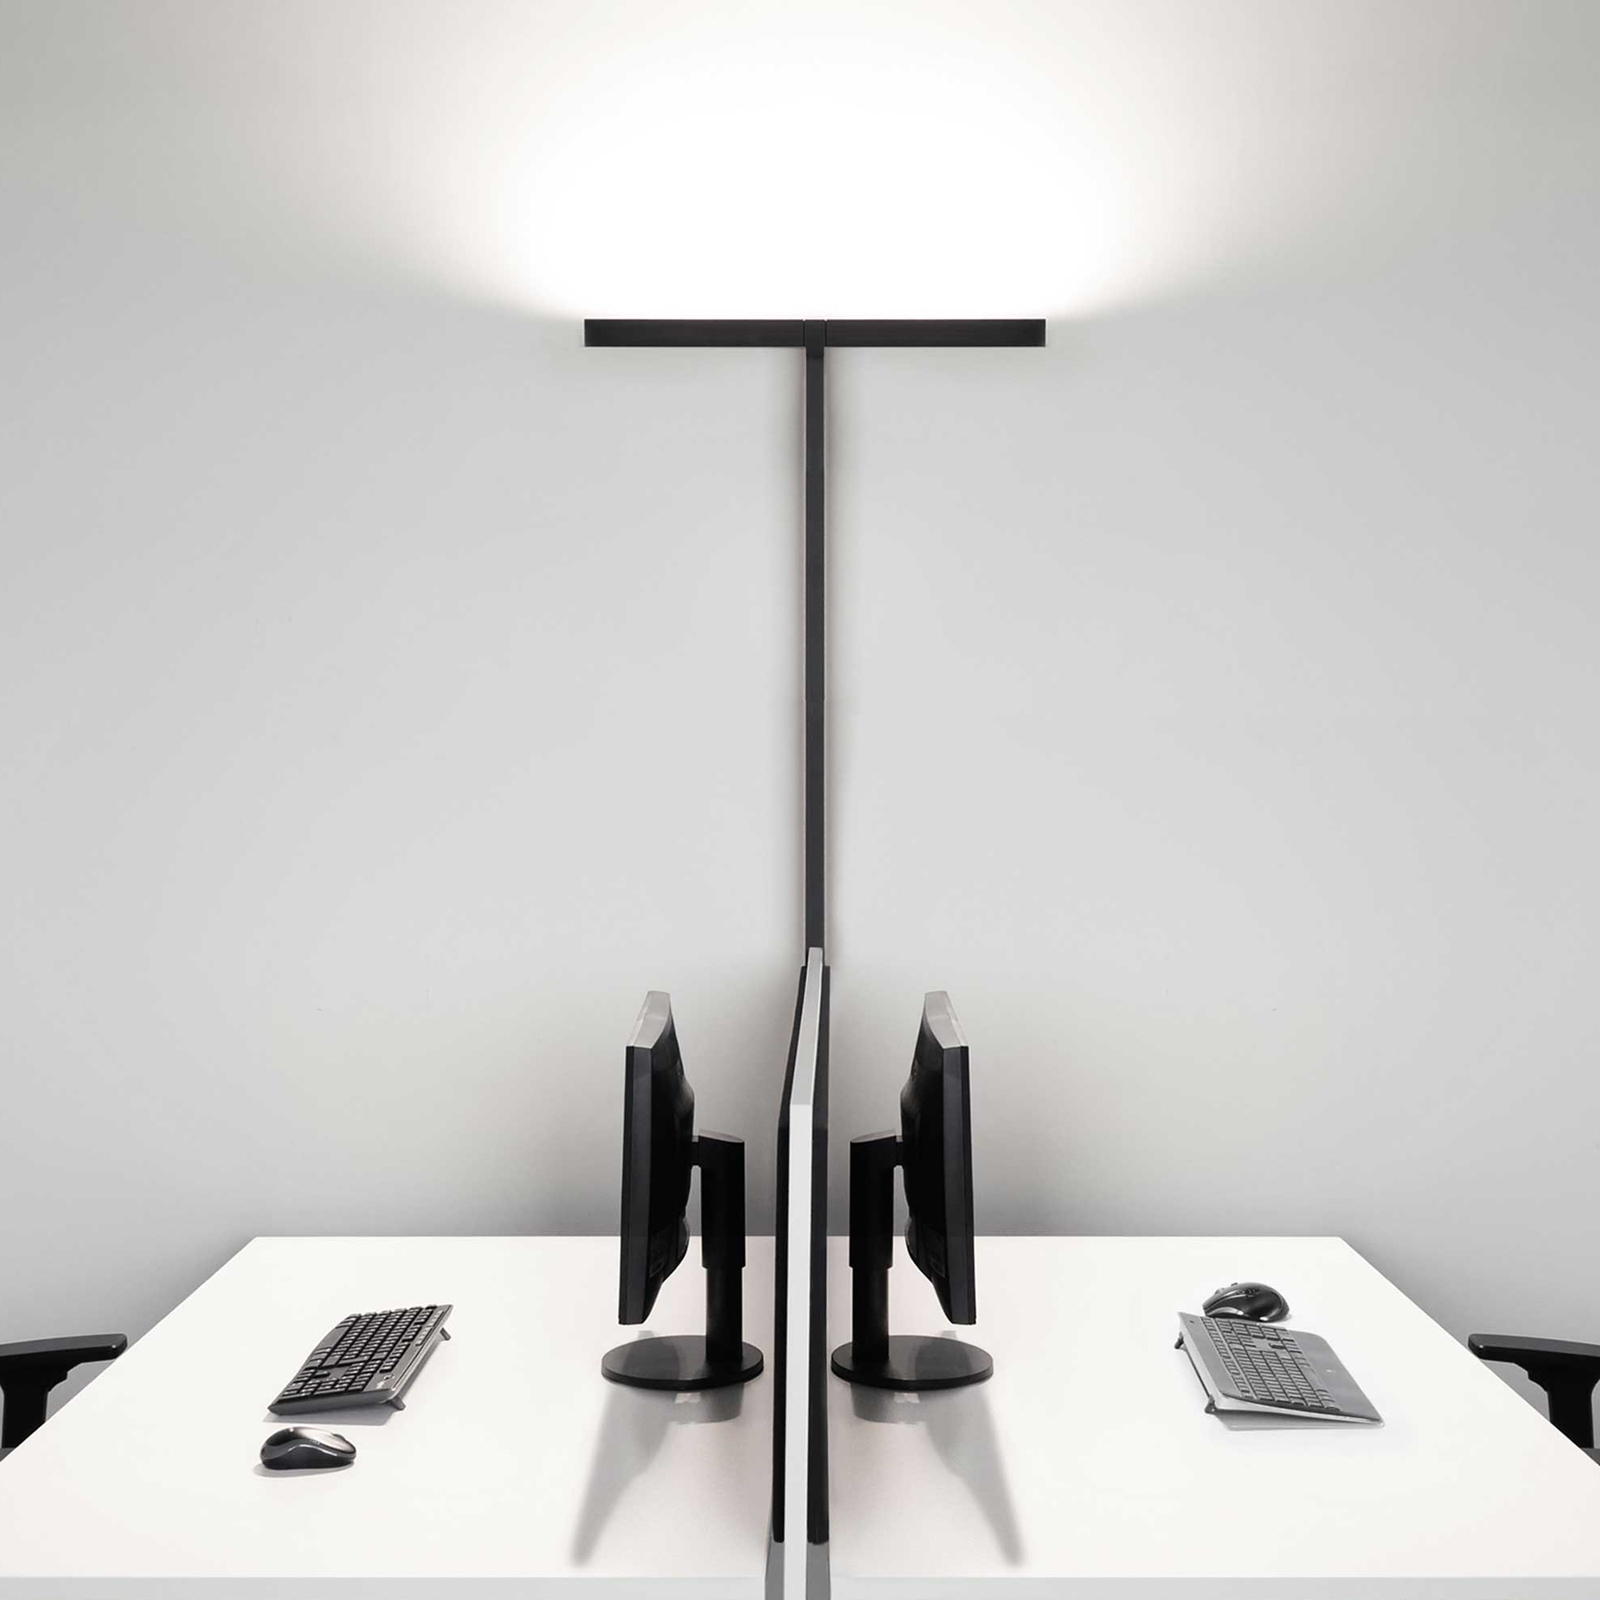 Molto Luce Concept Double F lampa stojąca biała